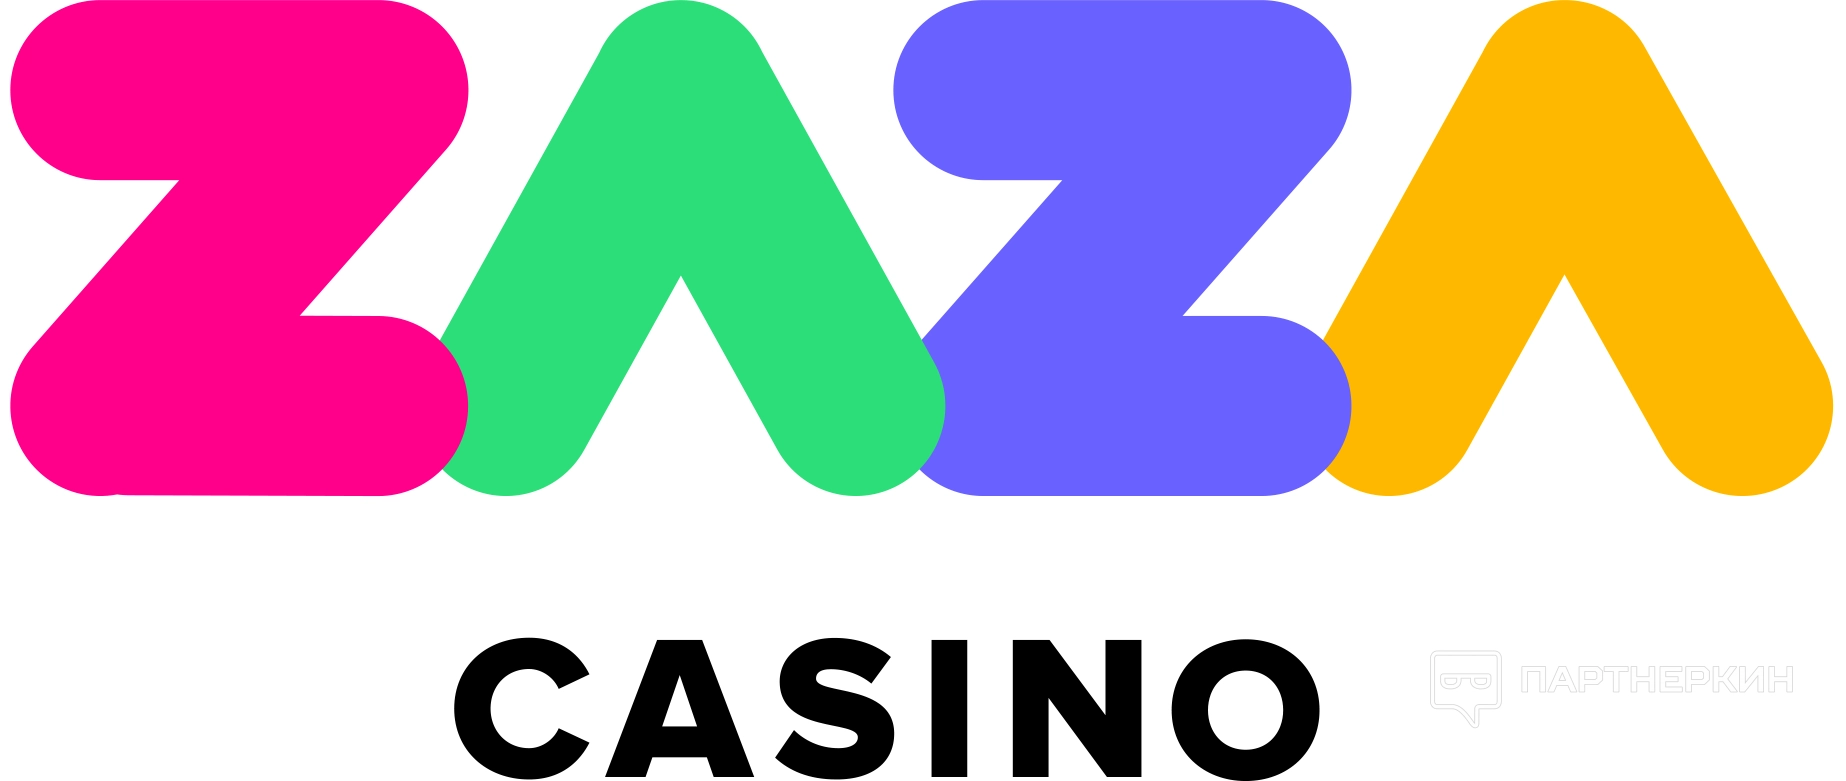 Zaza Casino Review post thumbnail image